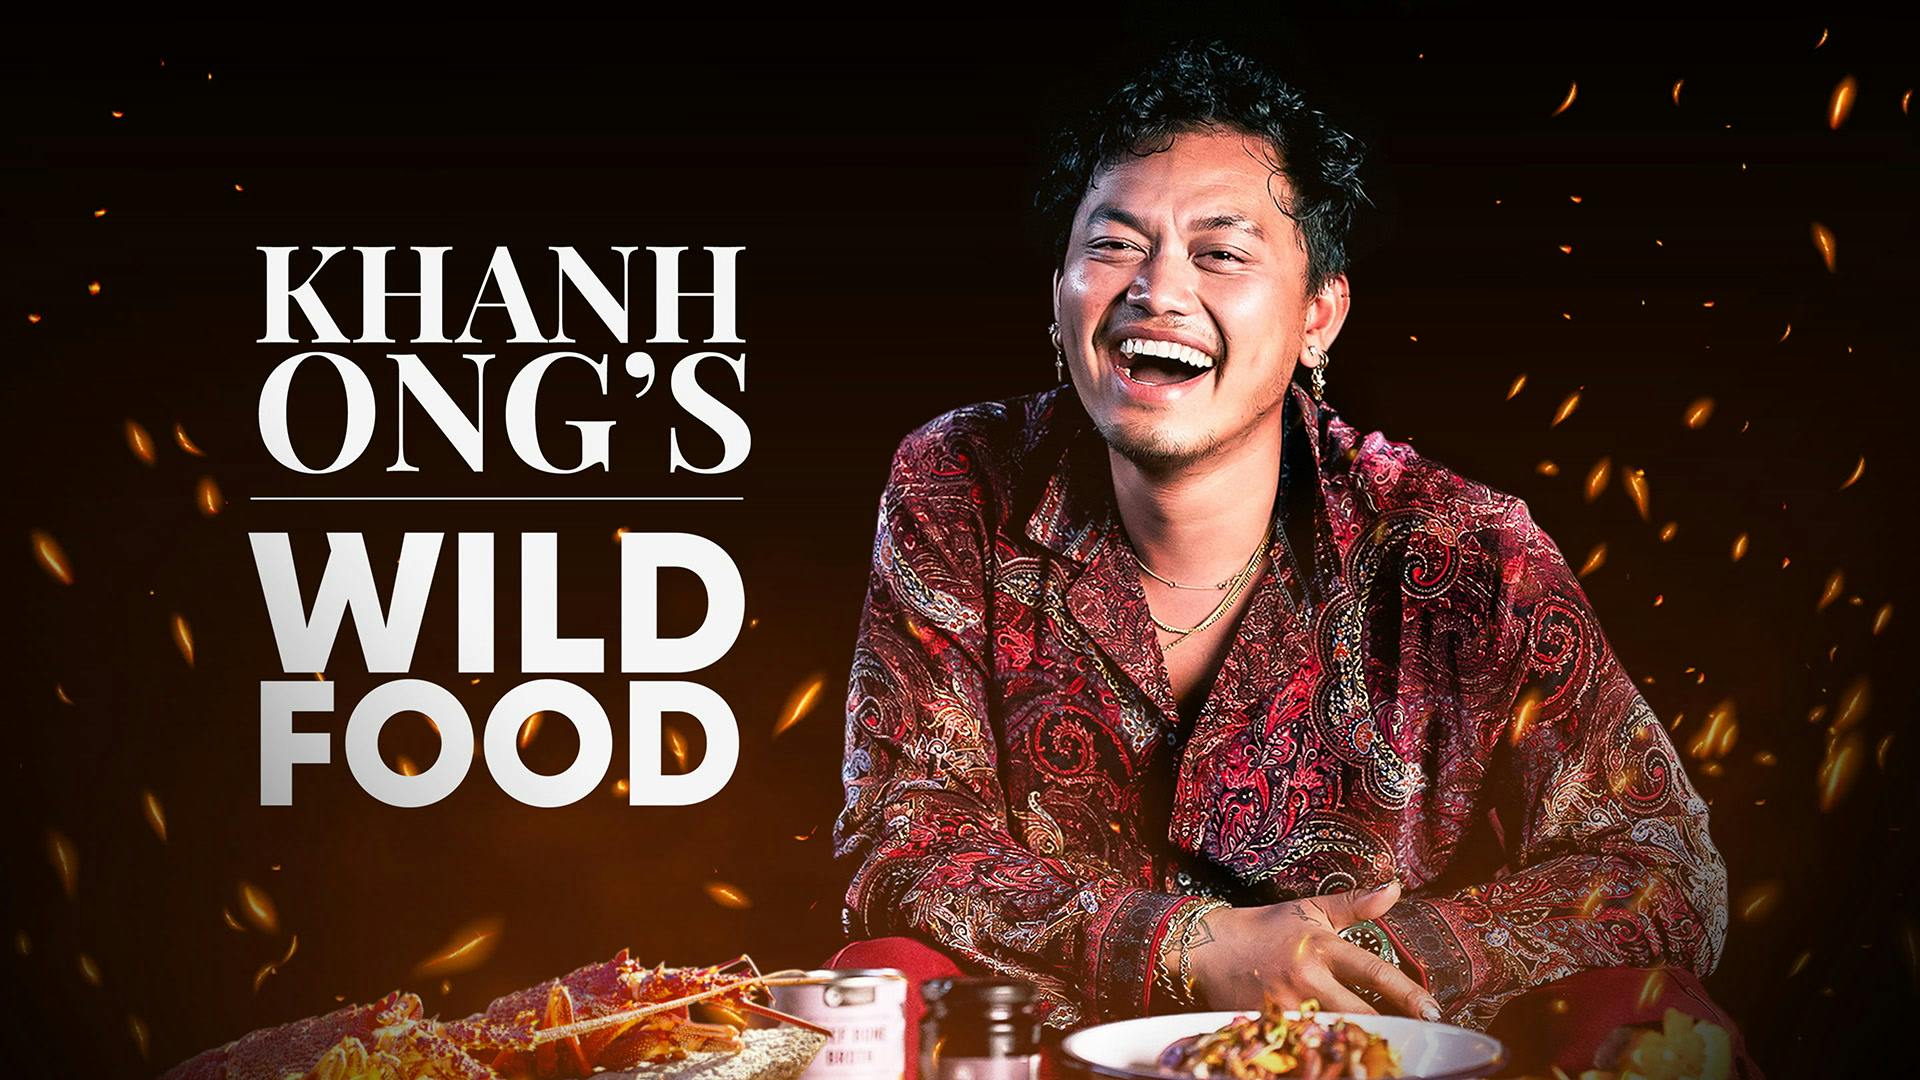 Khanh Ong’s Wild Food | Trailer